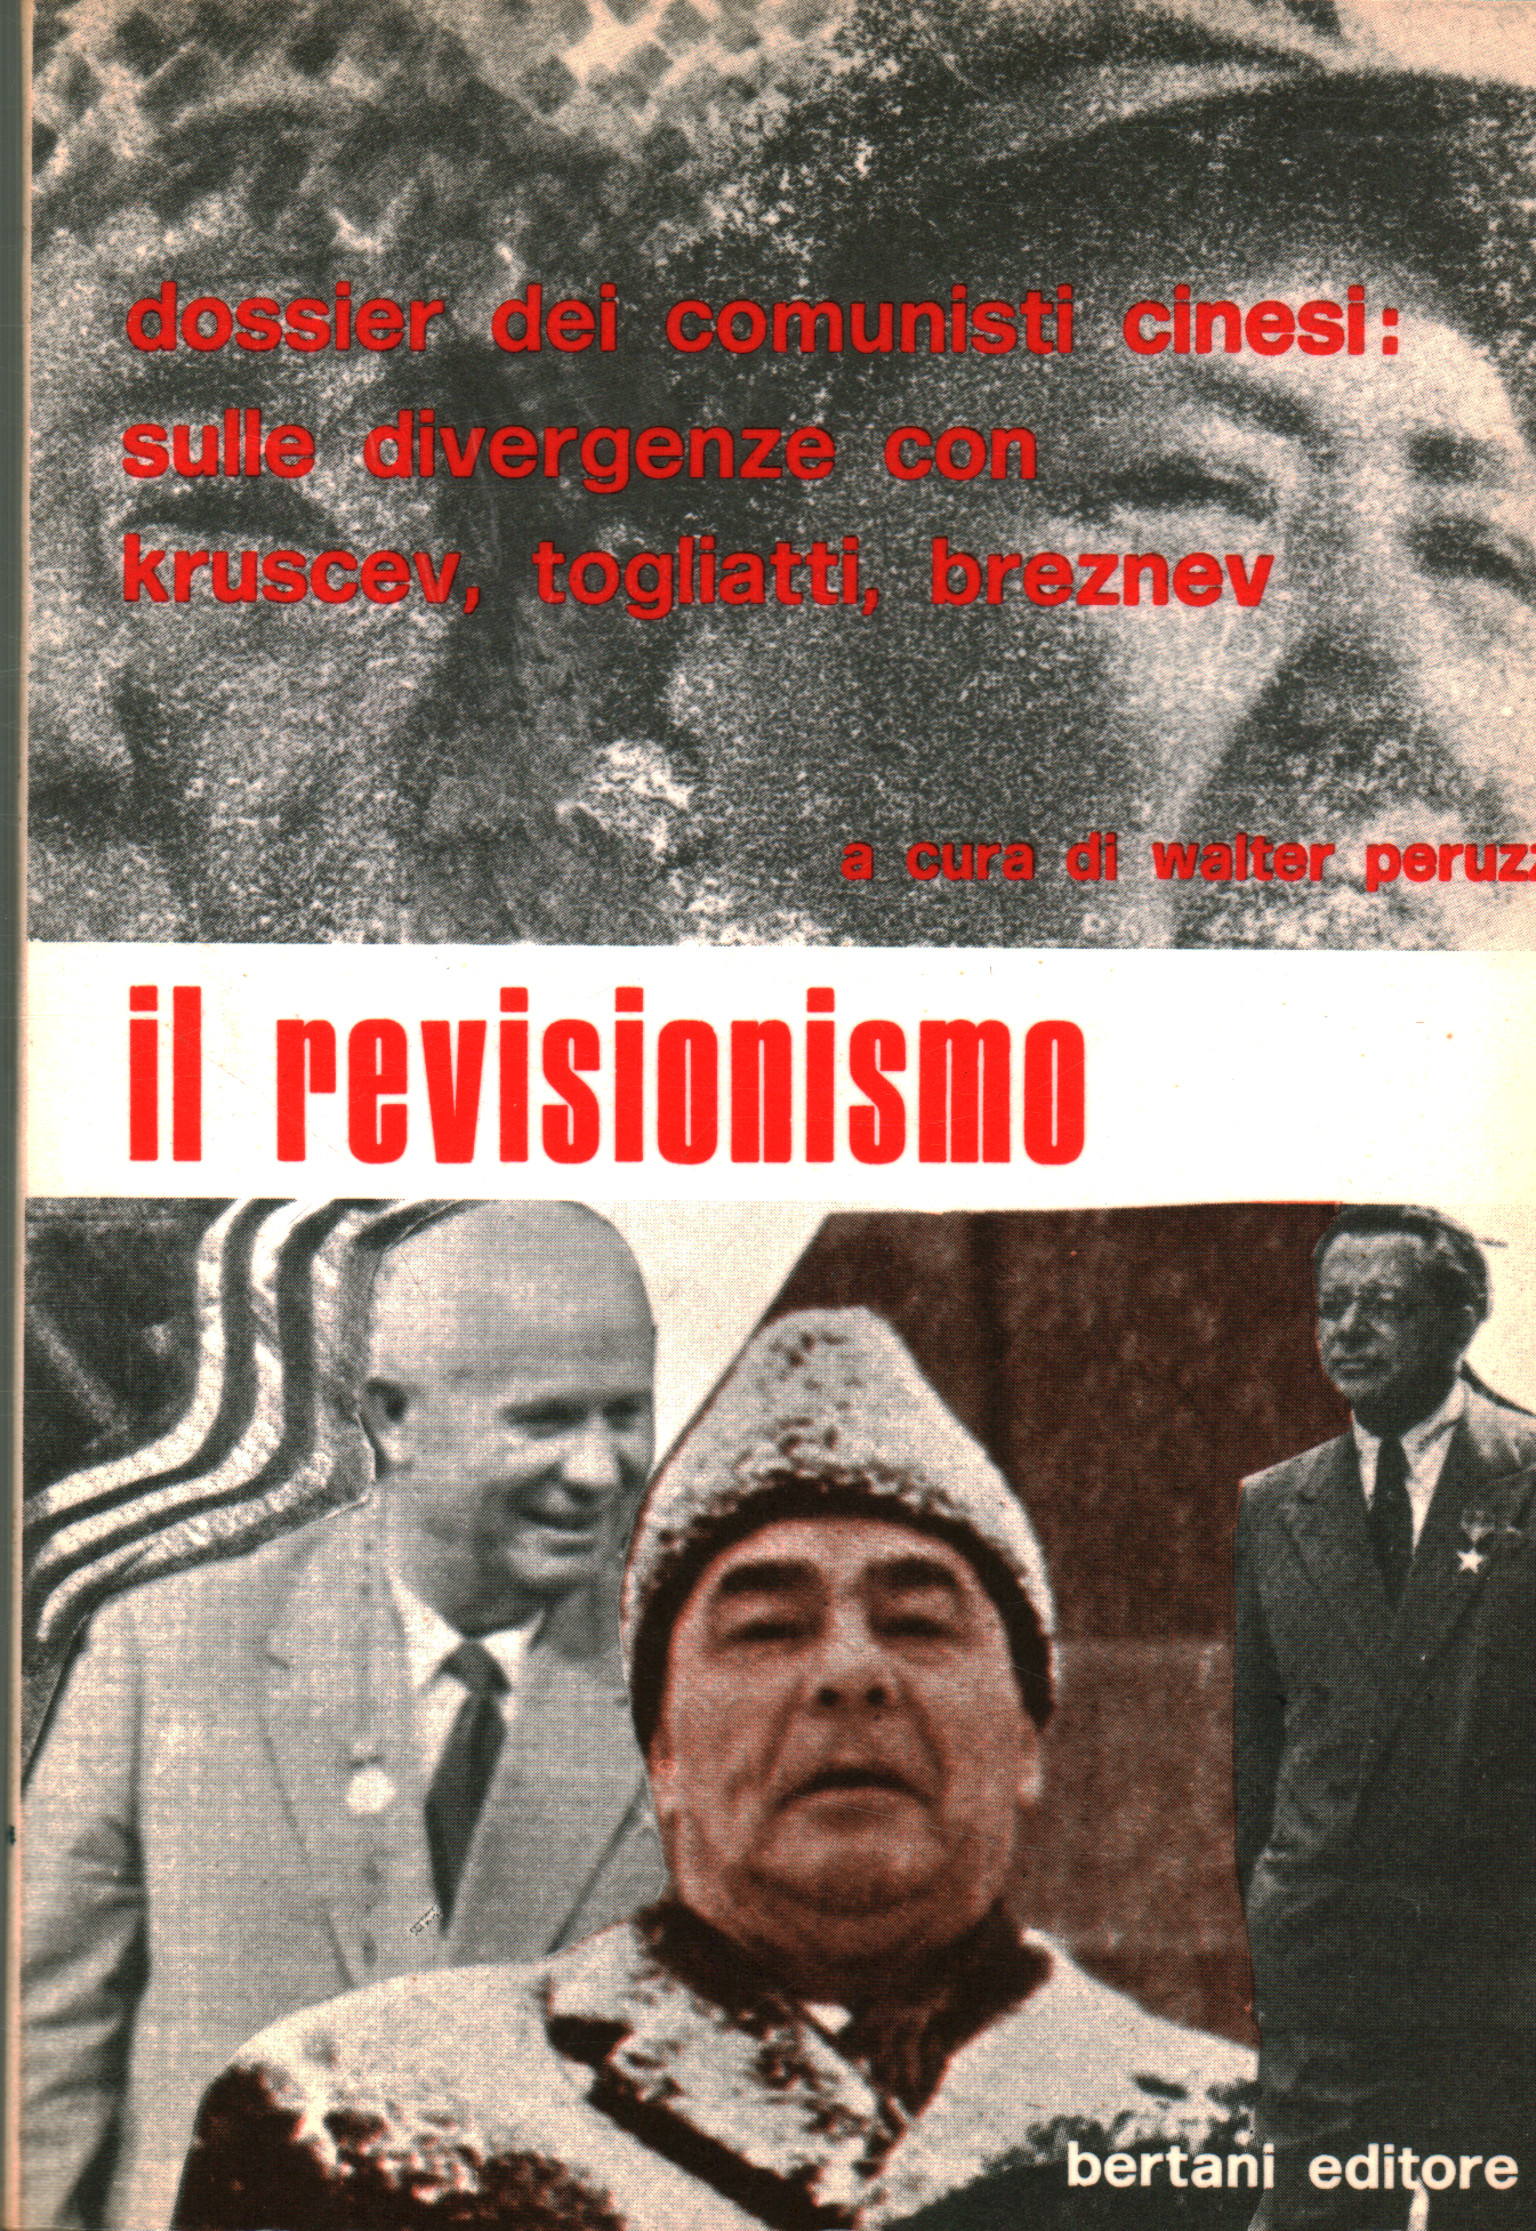 Revisionismus, Walter Peruzzi